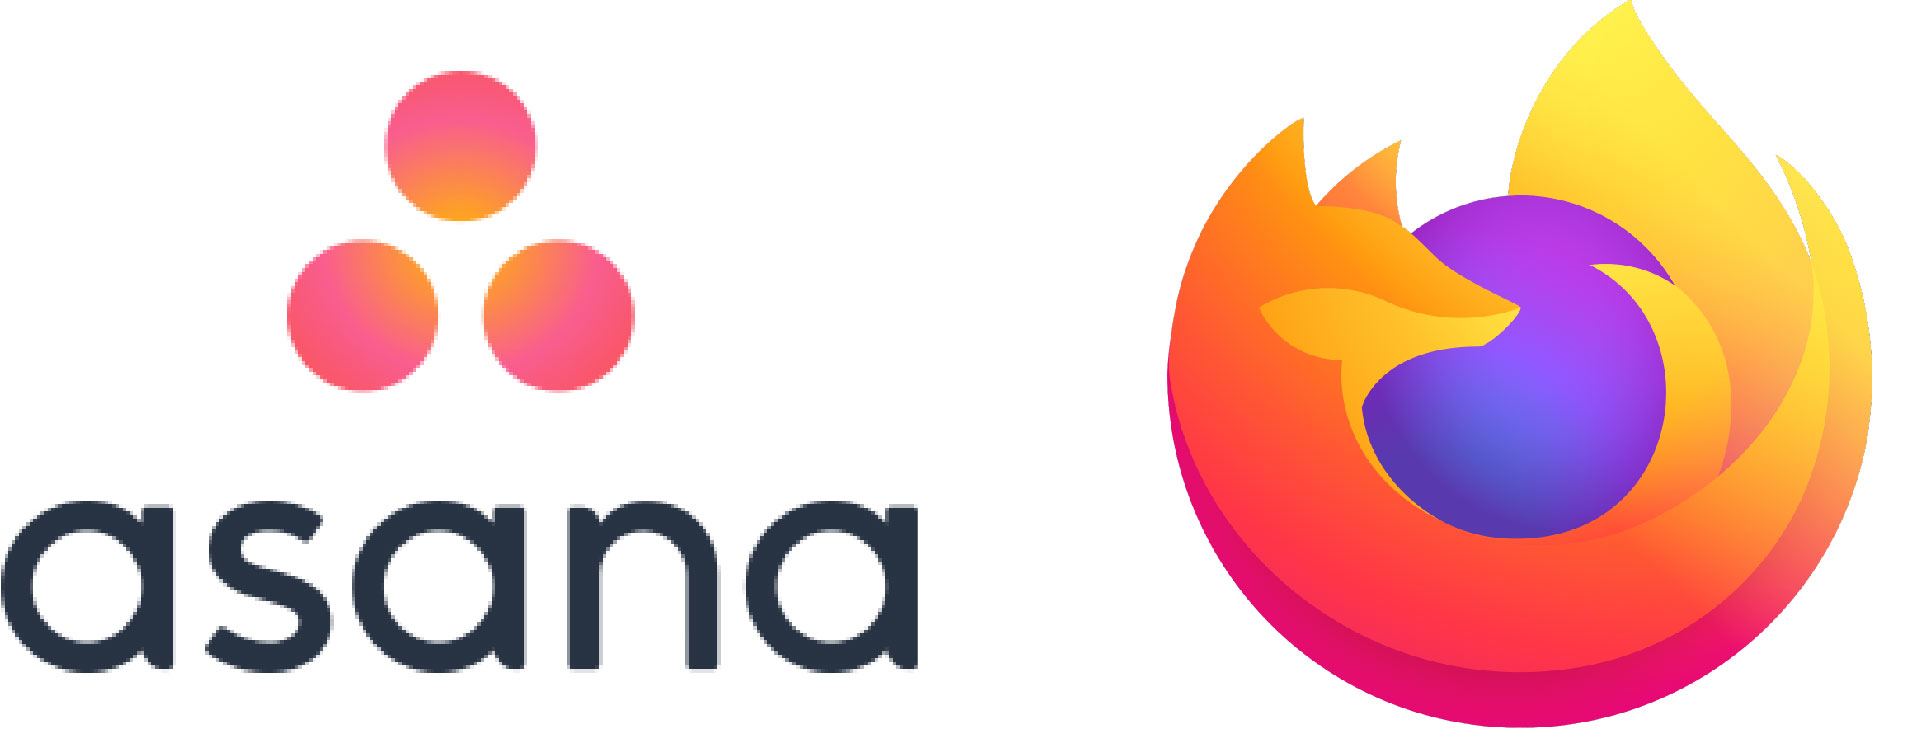 gradient logos asana and firefox